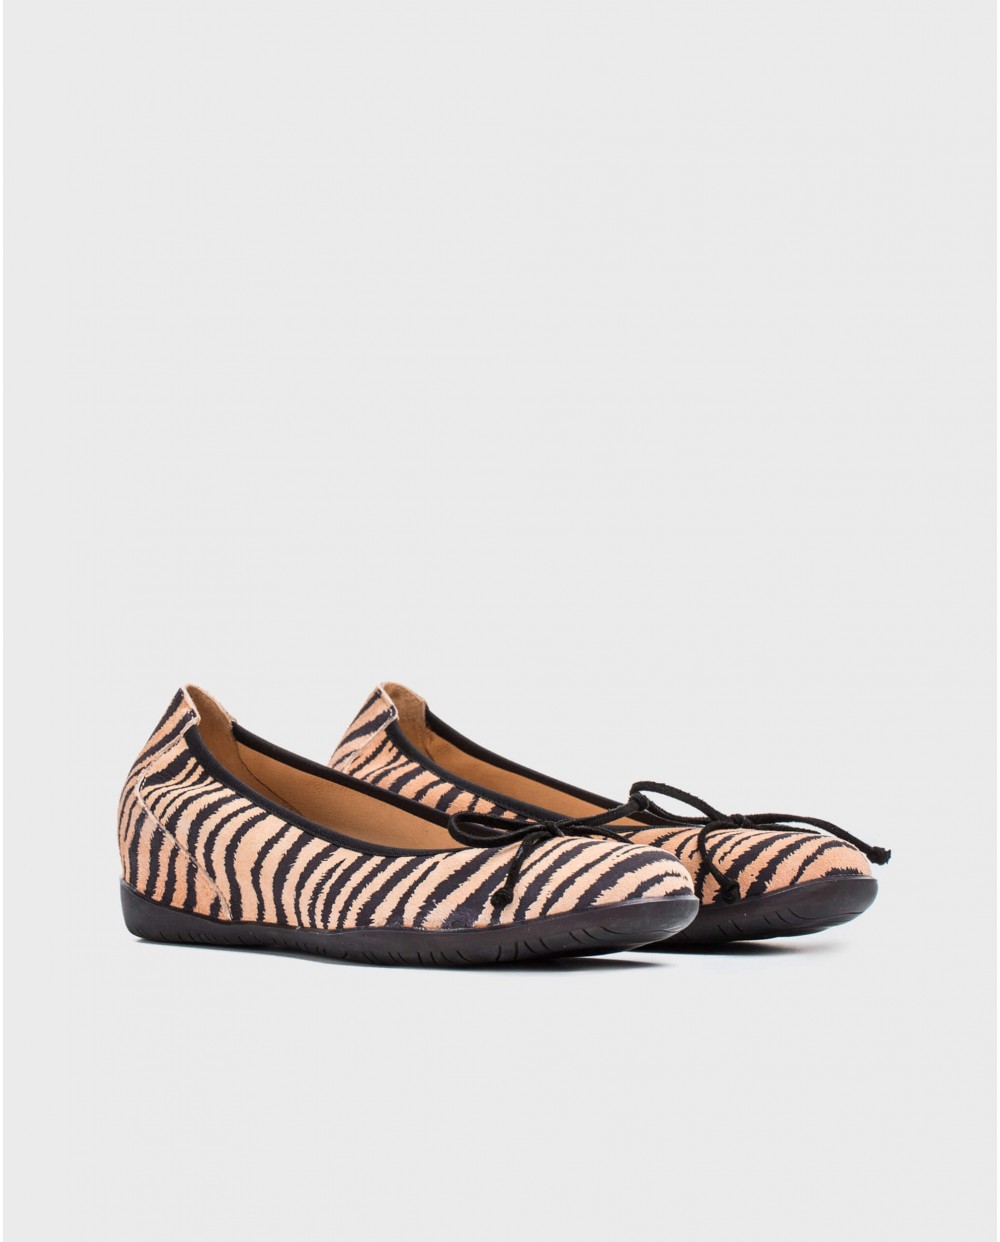 Wonders-Zapatos planos-Bailarina grabado zebra detalle lazo